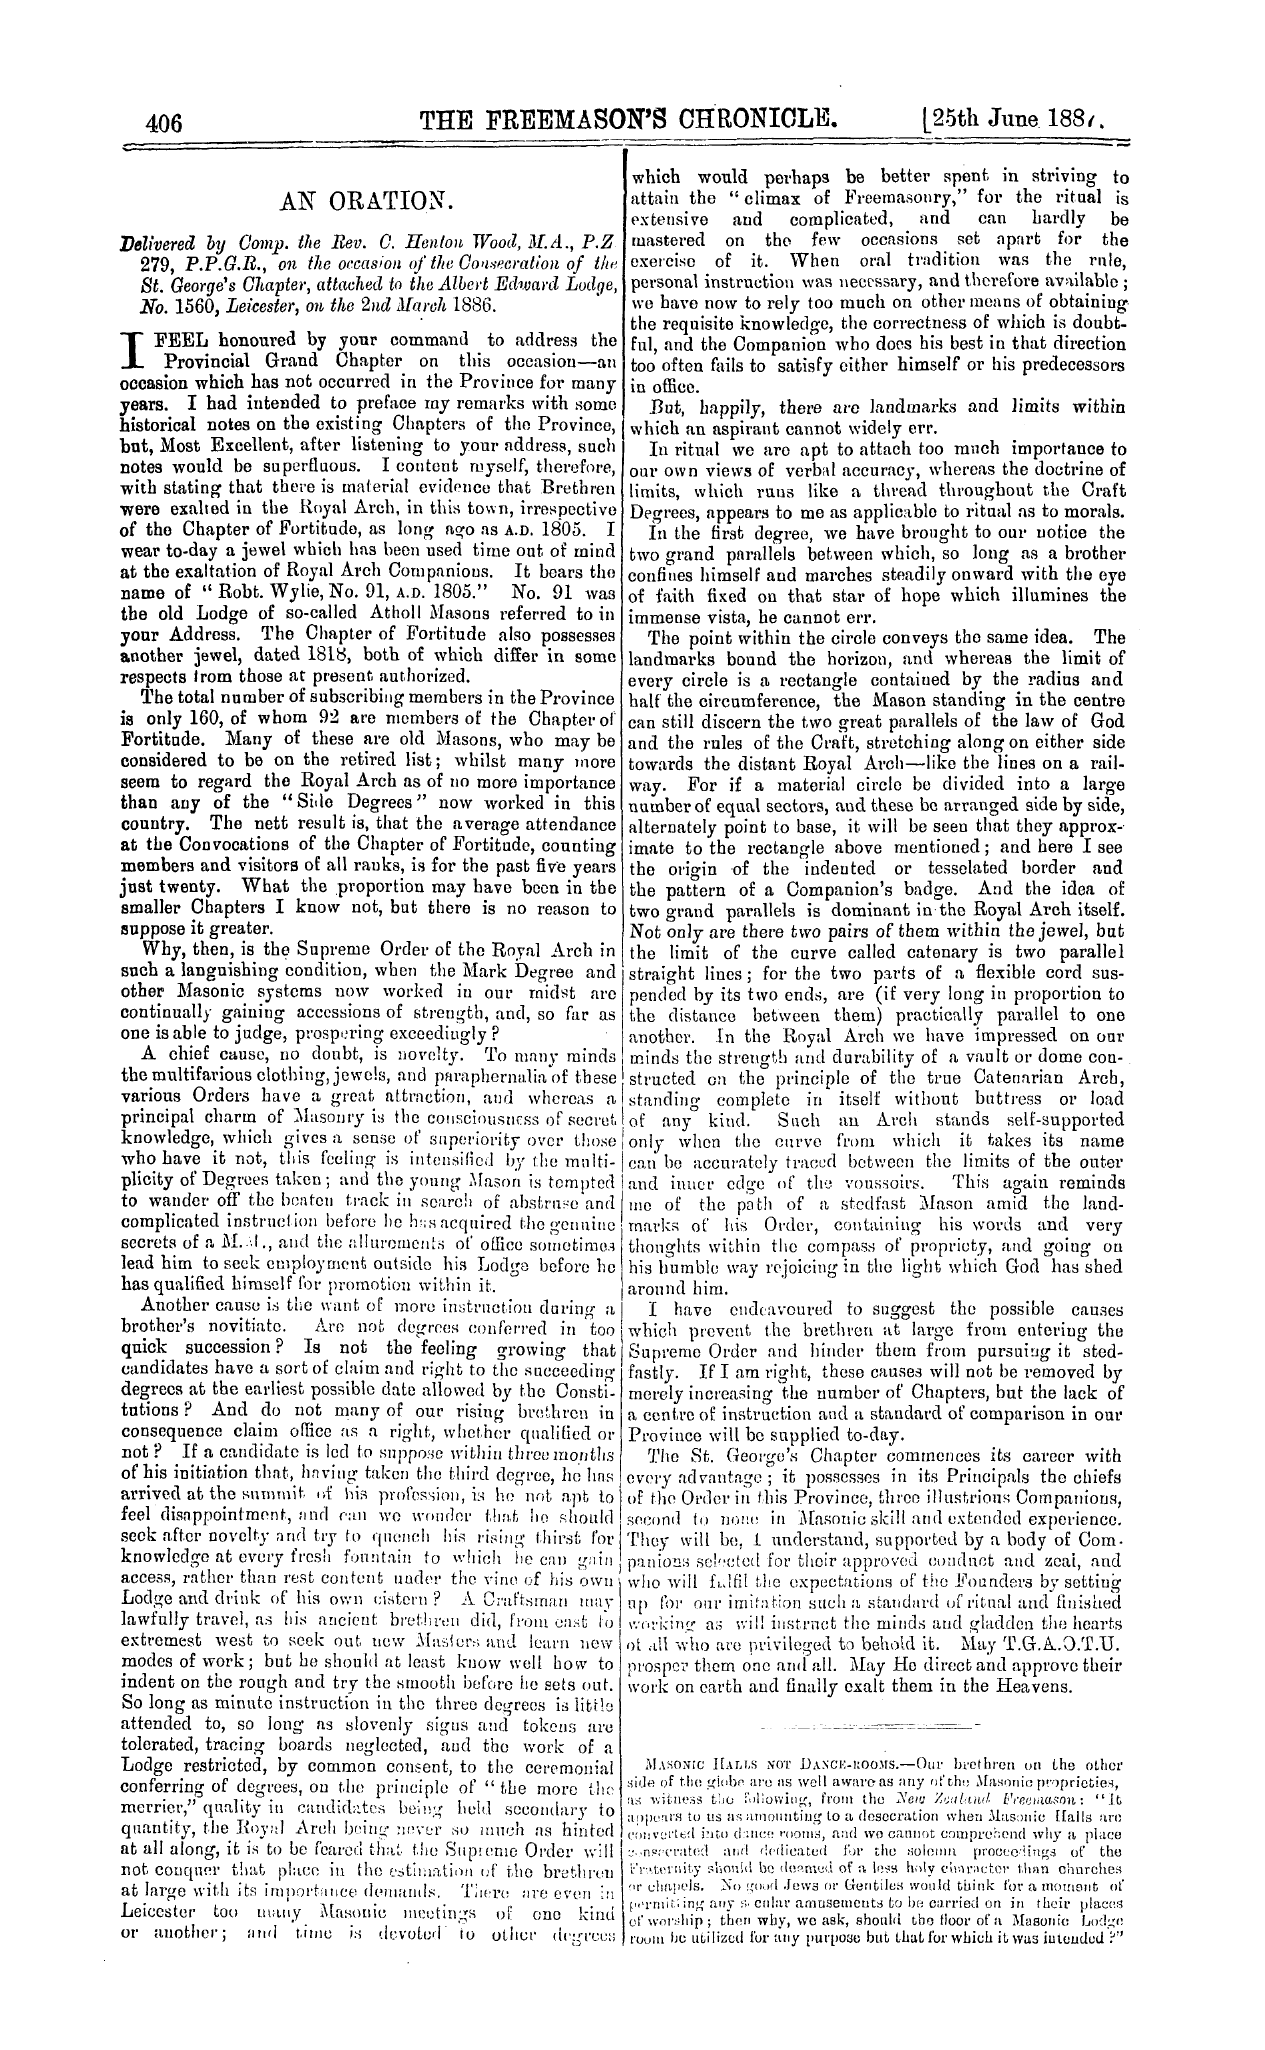 The Freemason's Chronicle: 1887-06-25: 6